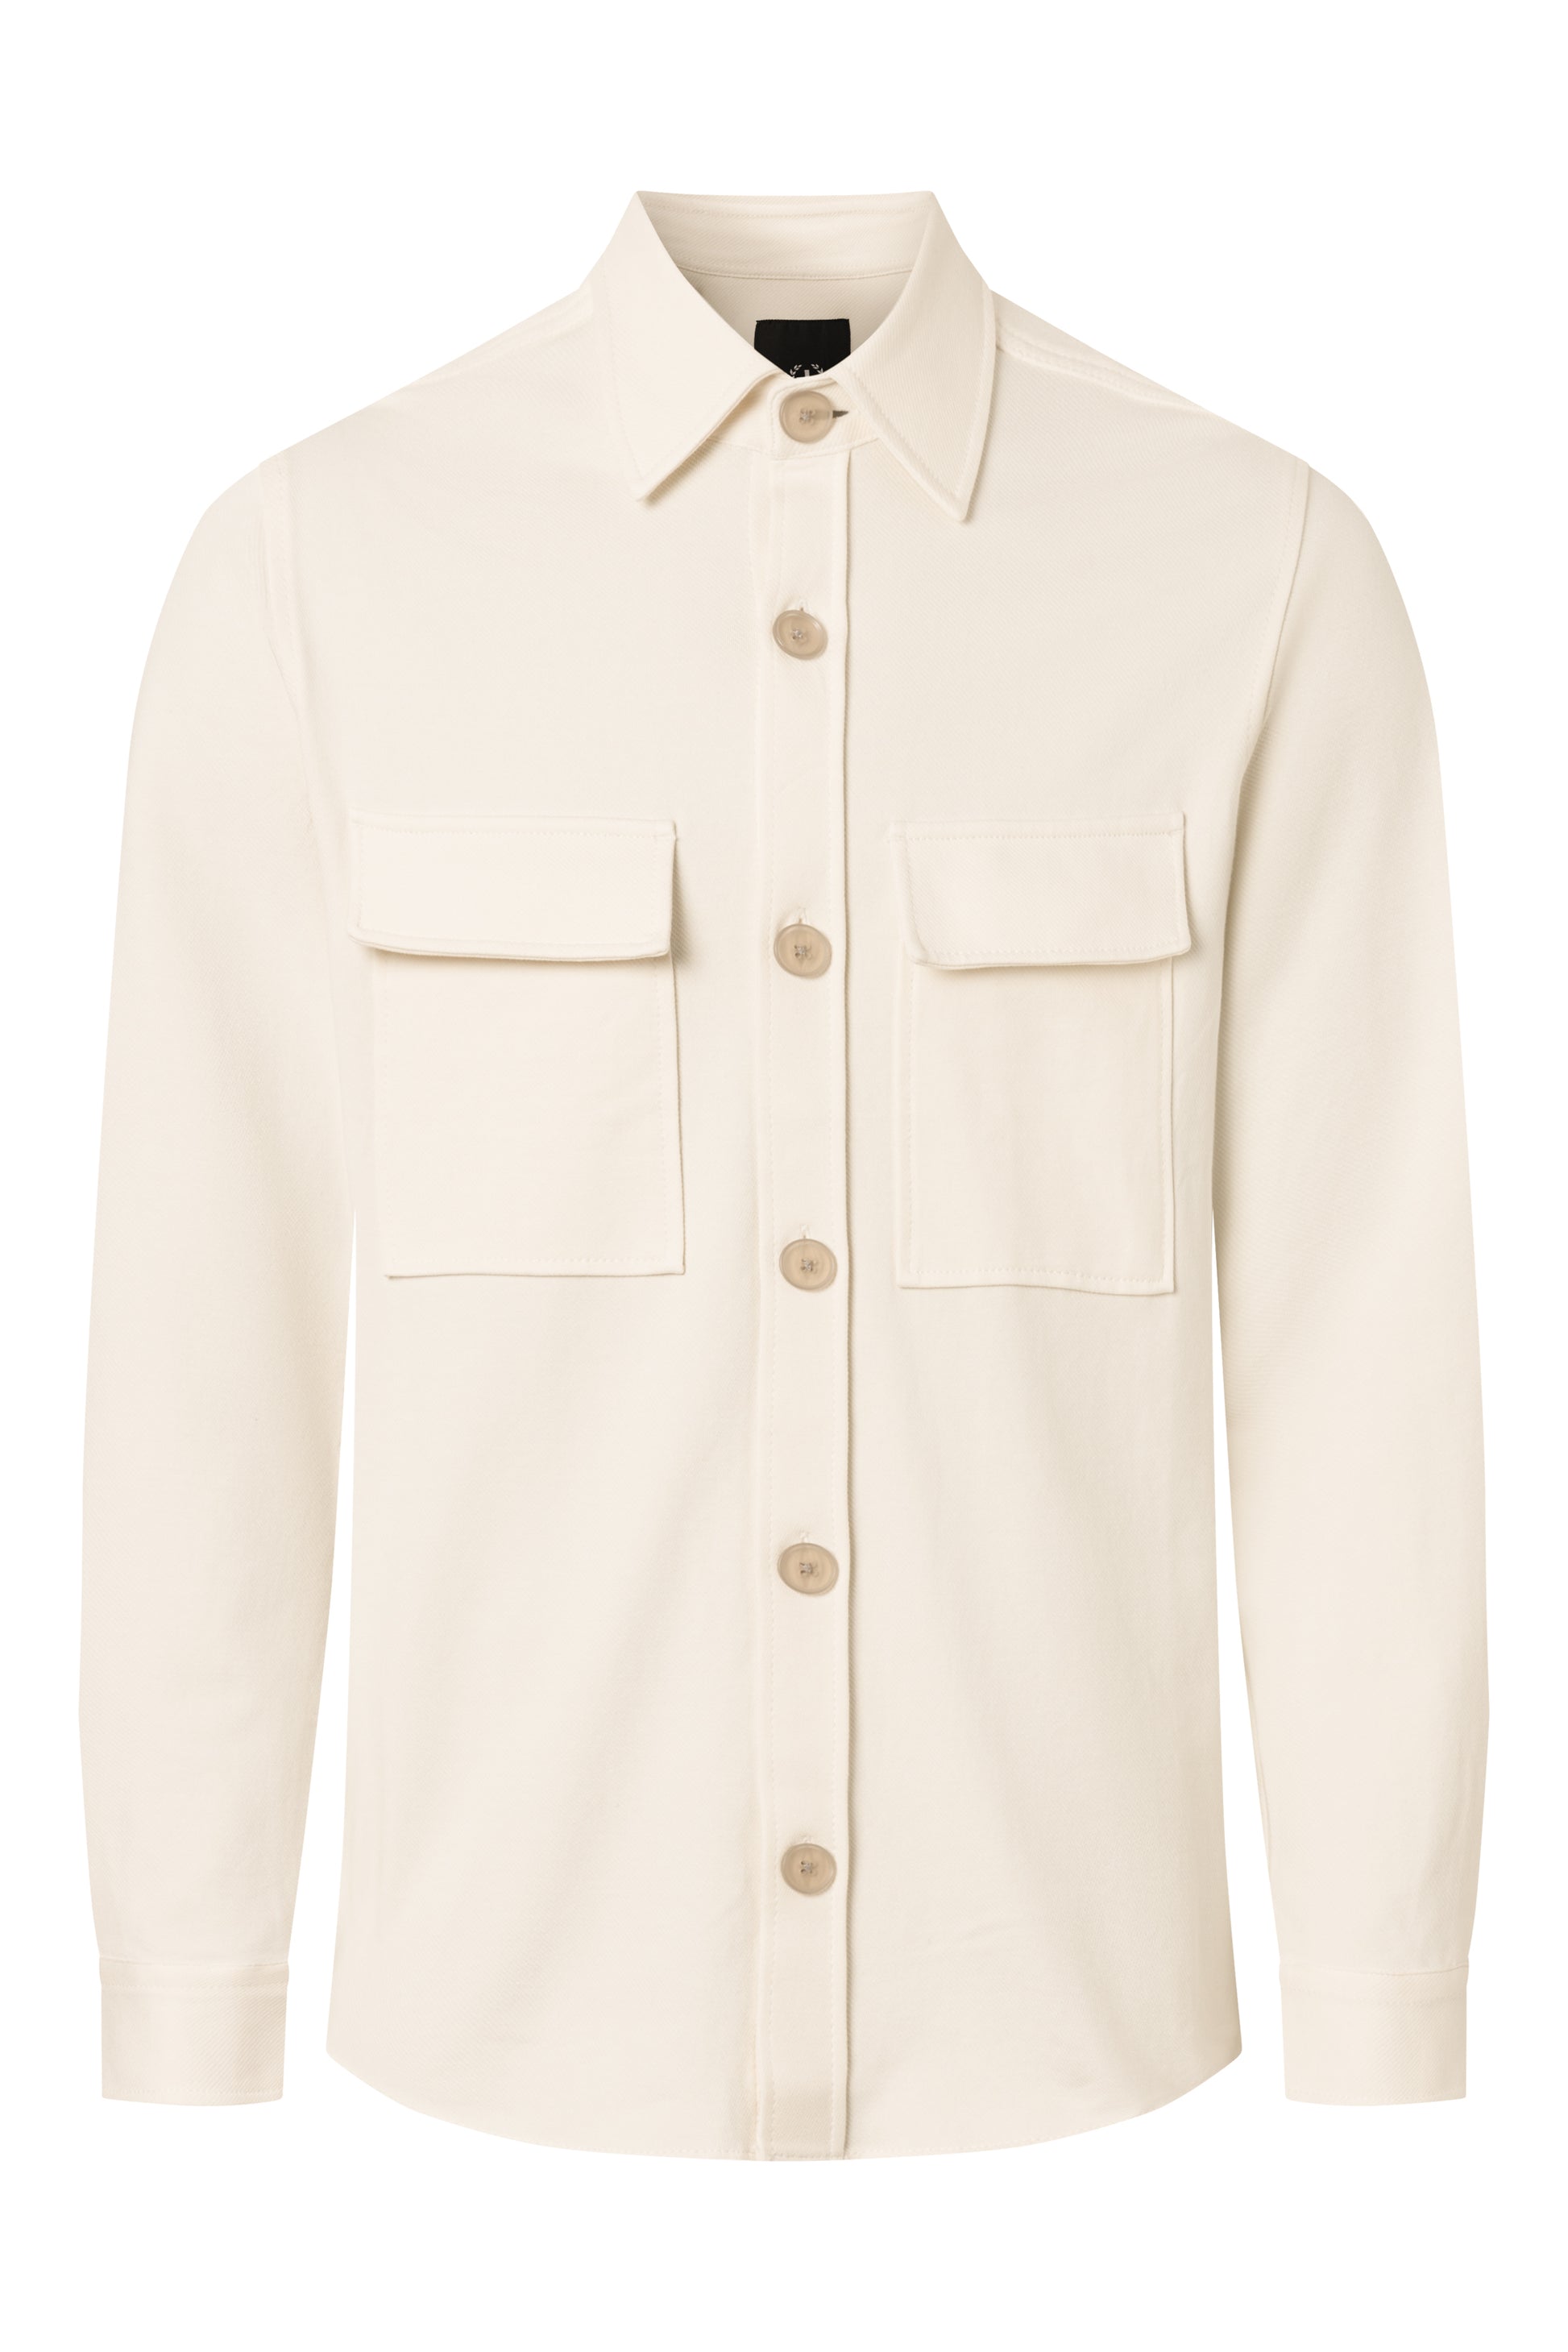 Strellson Off white buttoned shirt